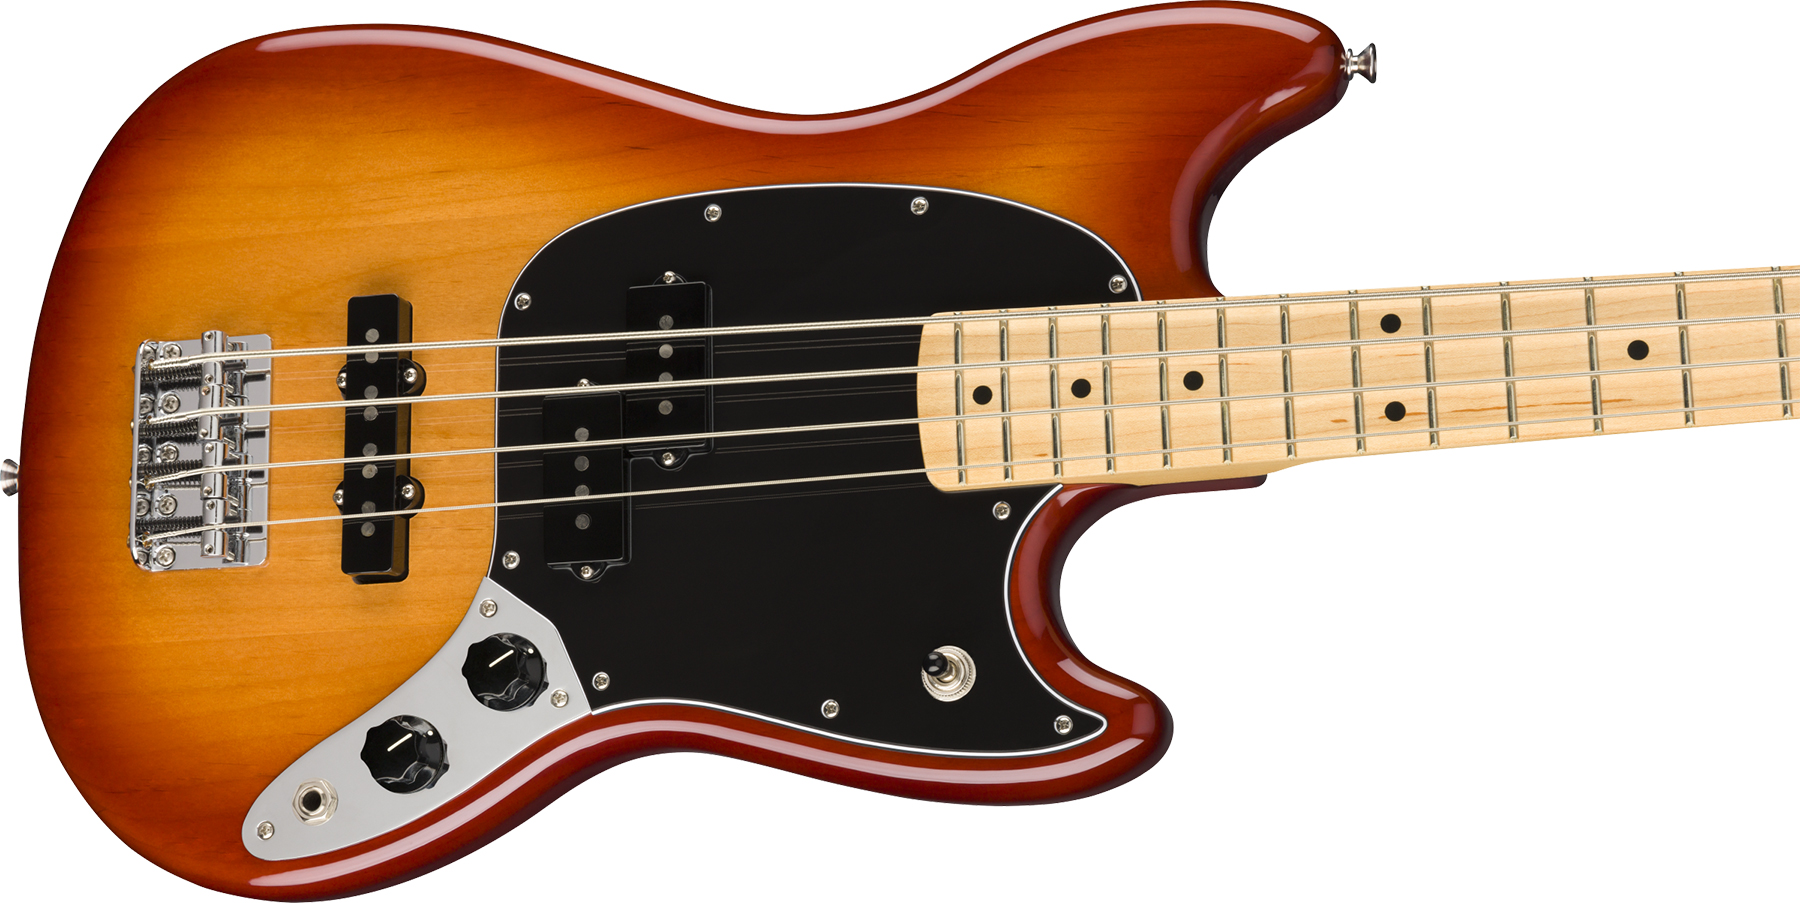 Fender Player Mustang Bass Mex Pj Mn - Sienna Sunburst - Electric bass for kids - Variation 2